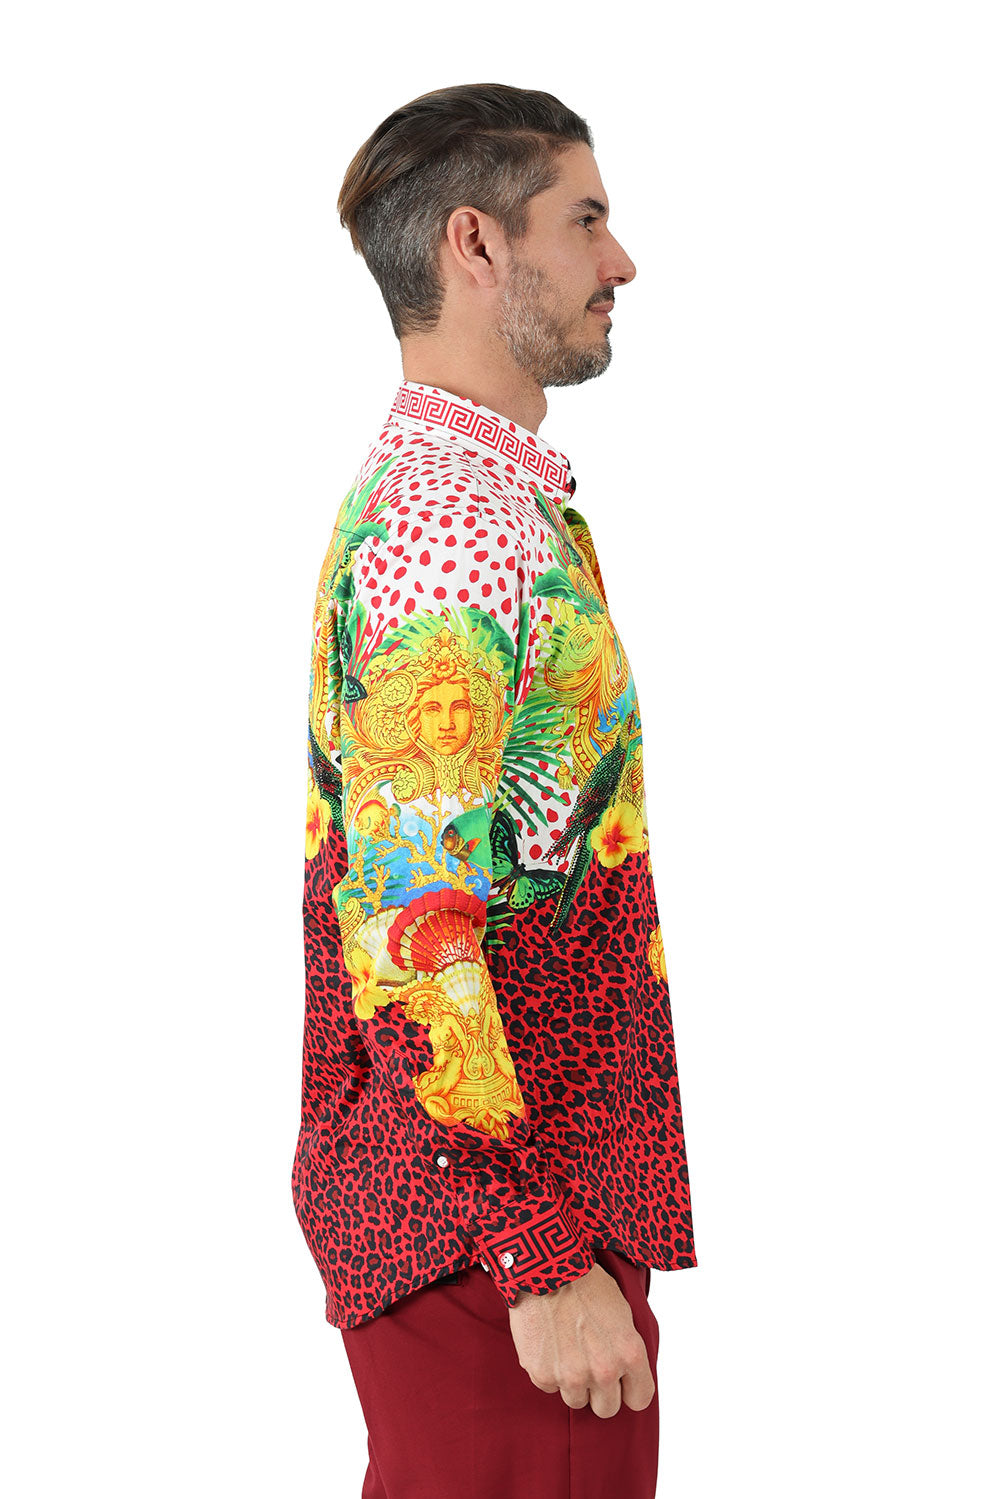 BARABAS Men's Rhinestone Printed Medusa Floral Leopard Shirts SPR230 Red